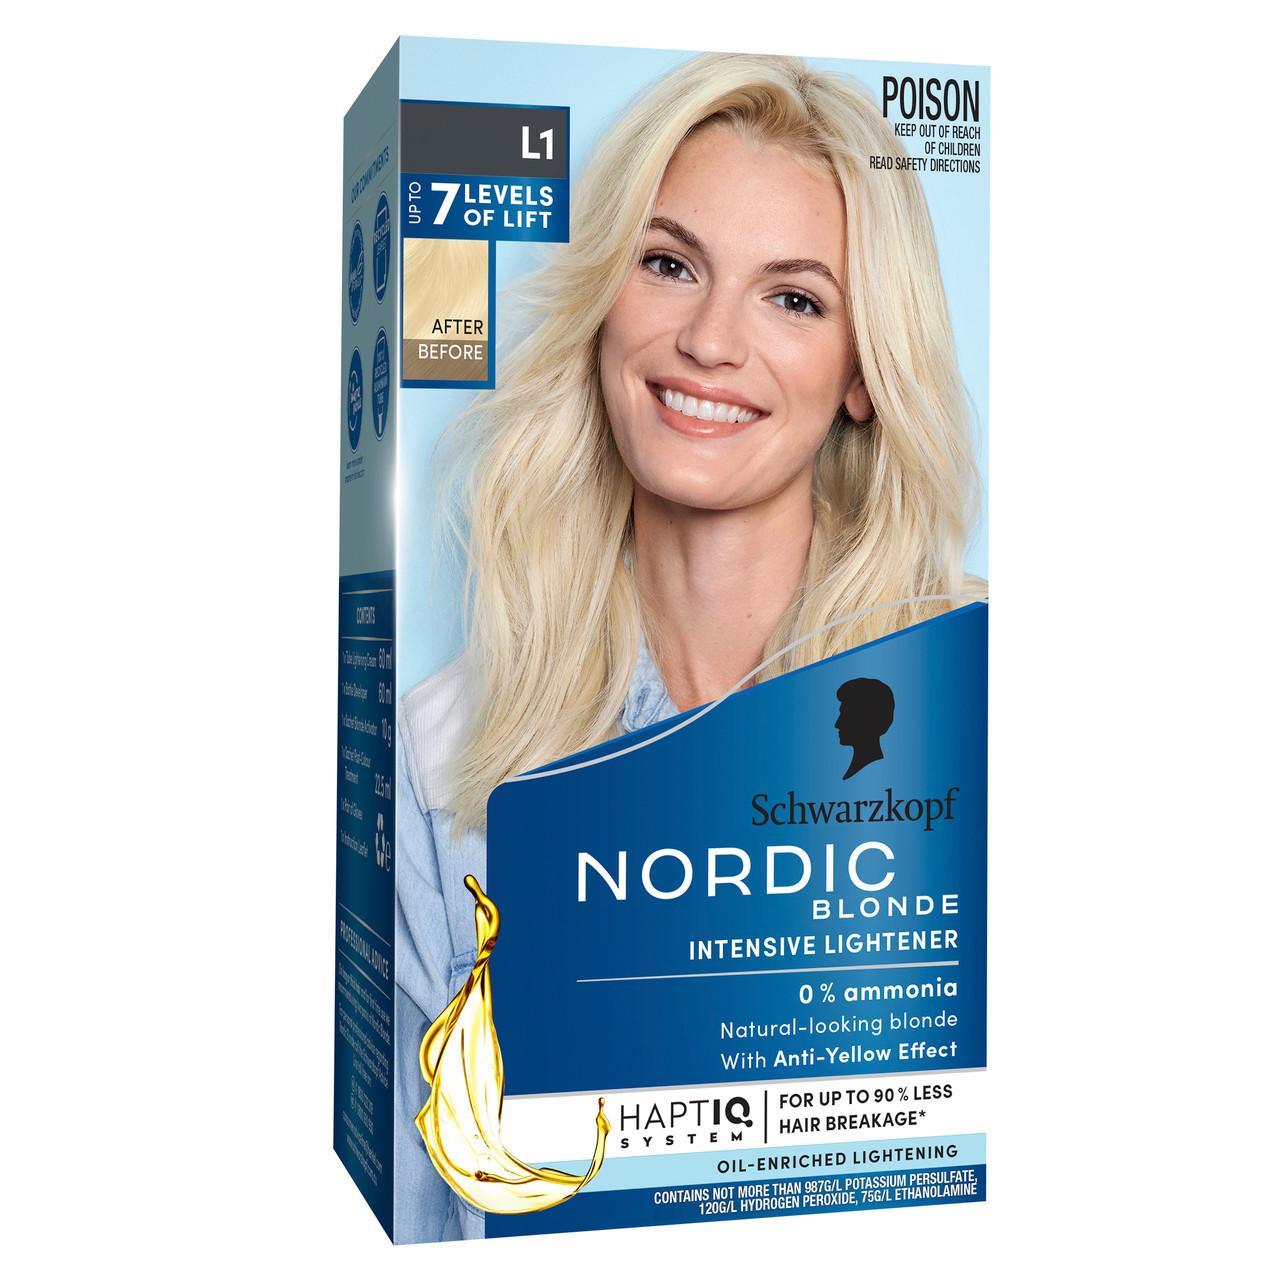 Nordic Blonde L1 Intensive Lightener